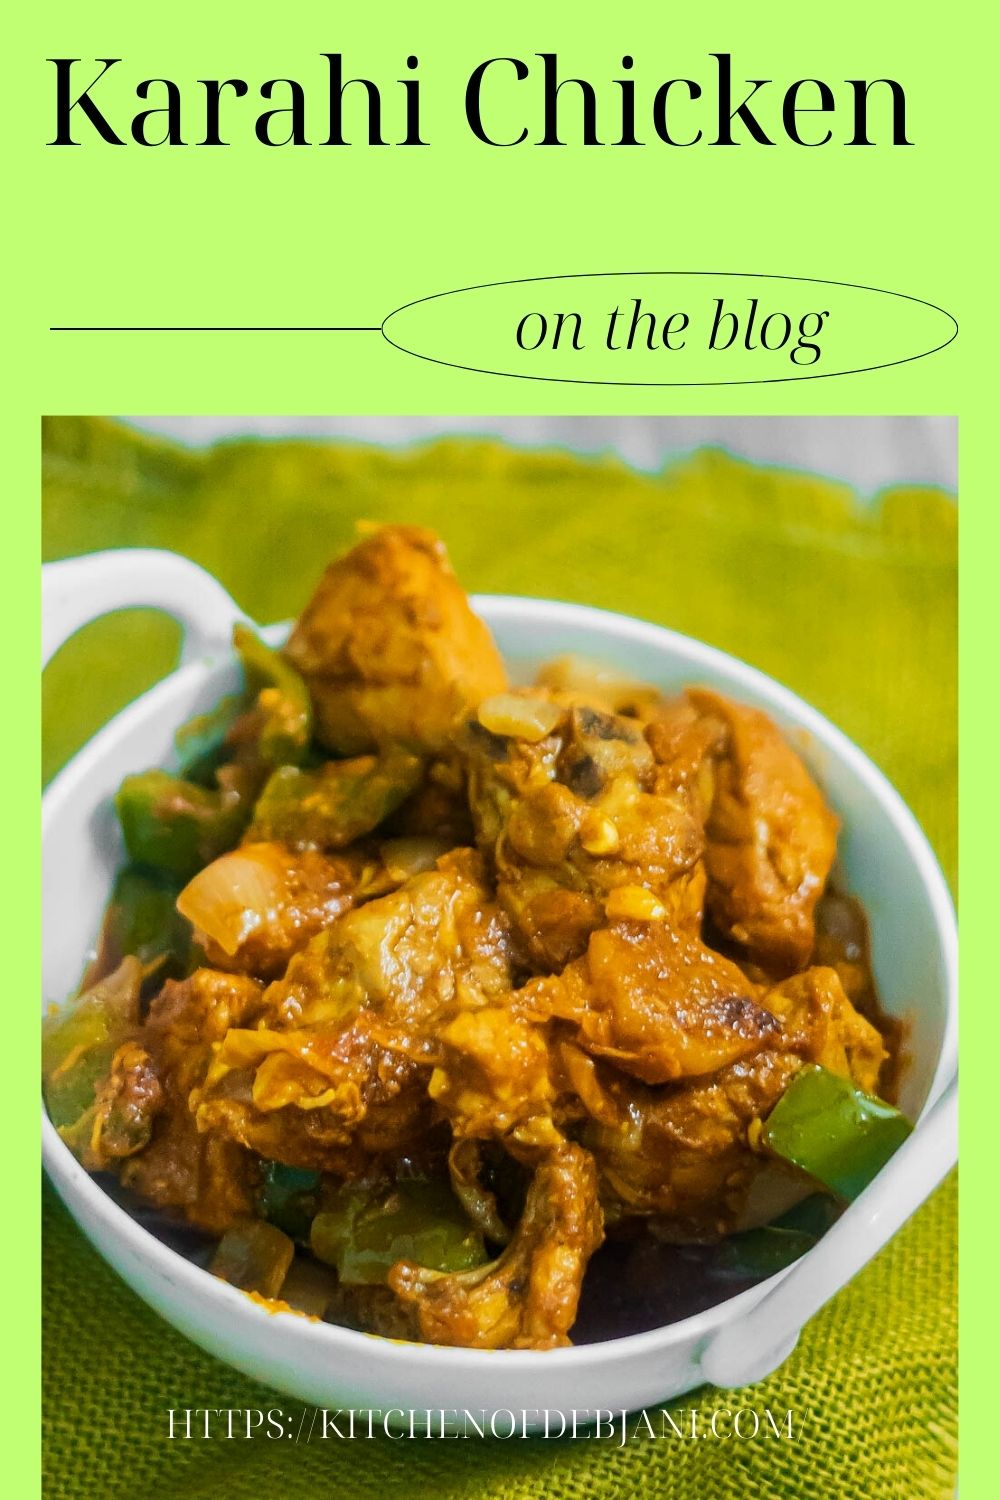 %chicken kadahi recipe debjanir rannaghar Recipe Food Pinterest Pin